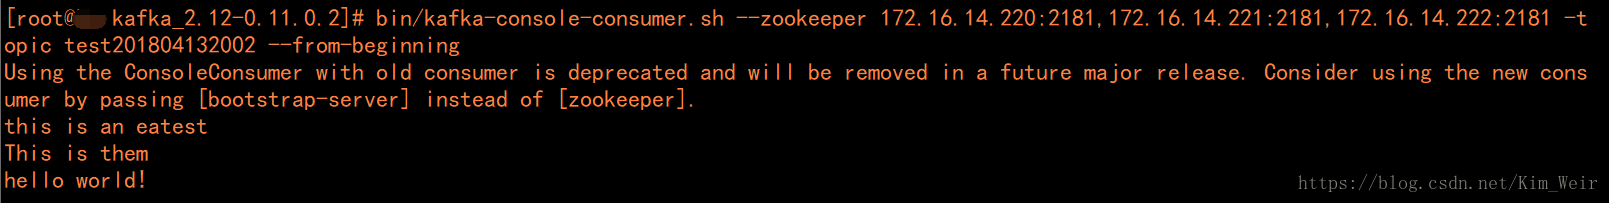 Centos6.5 搭建zookeeper-3.4.10和Kafka-2.12-0.11.0.2集群